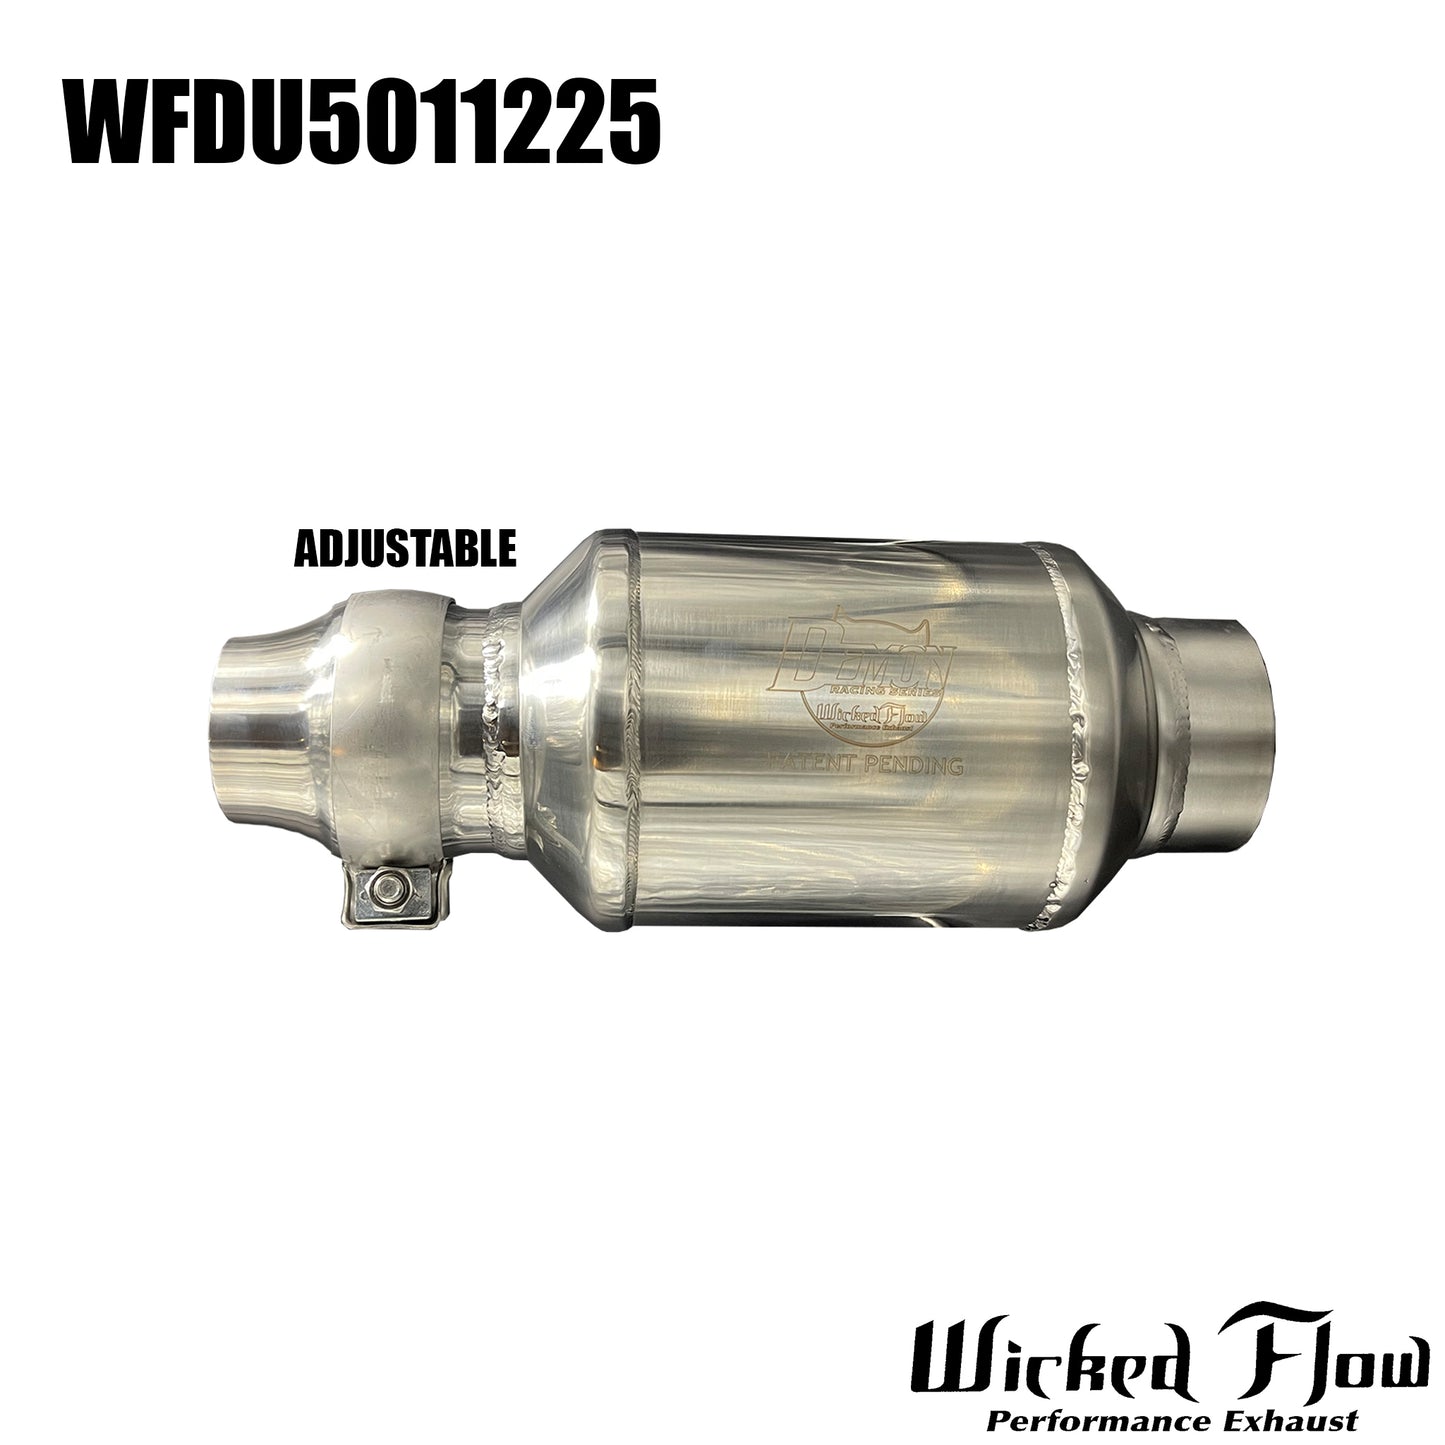 WFDU50115225 - Demon Muffler 2.25" - ADJUSTABLE